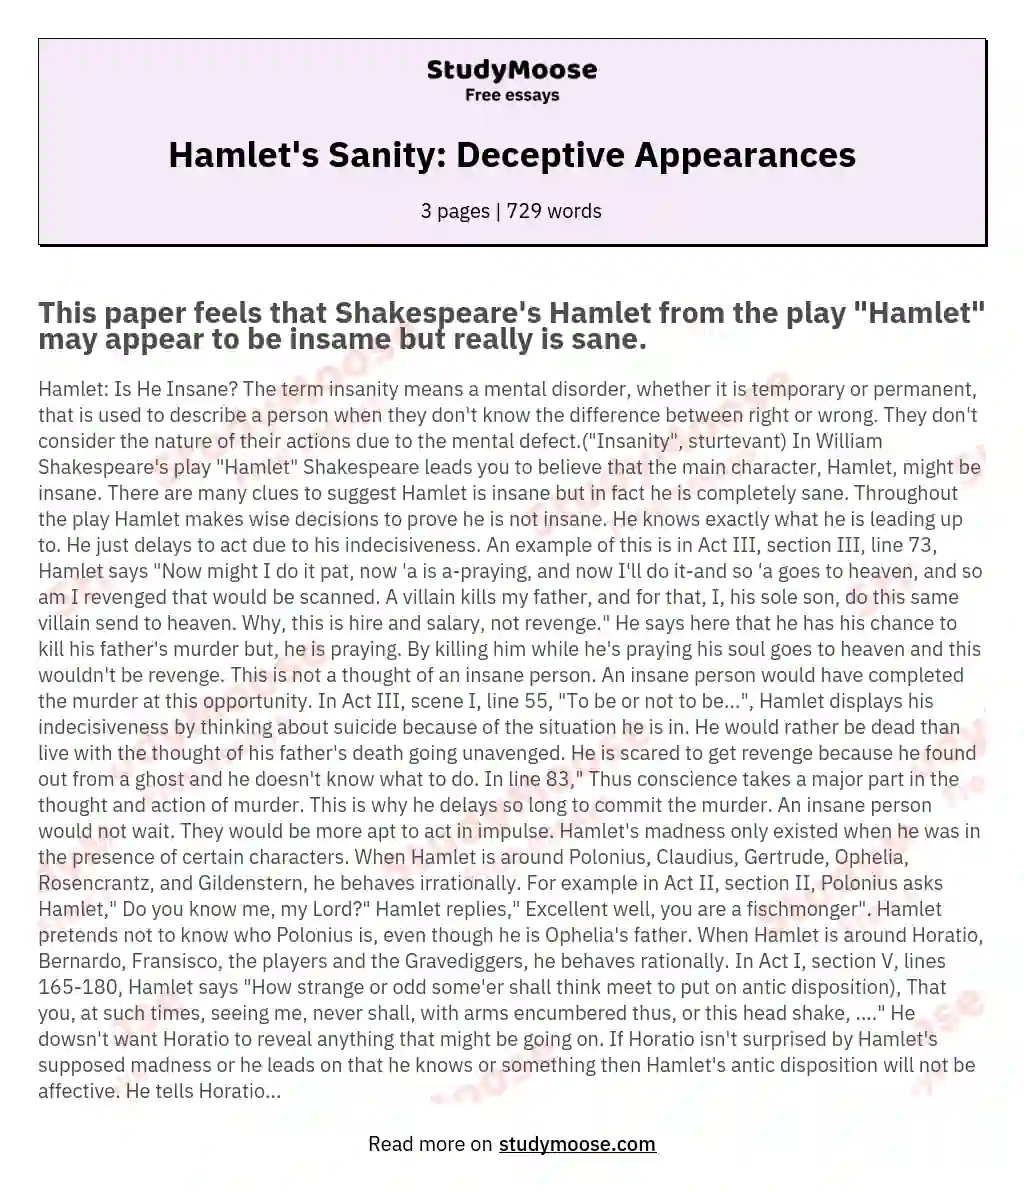 Hamlet: Is He Insane?